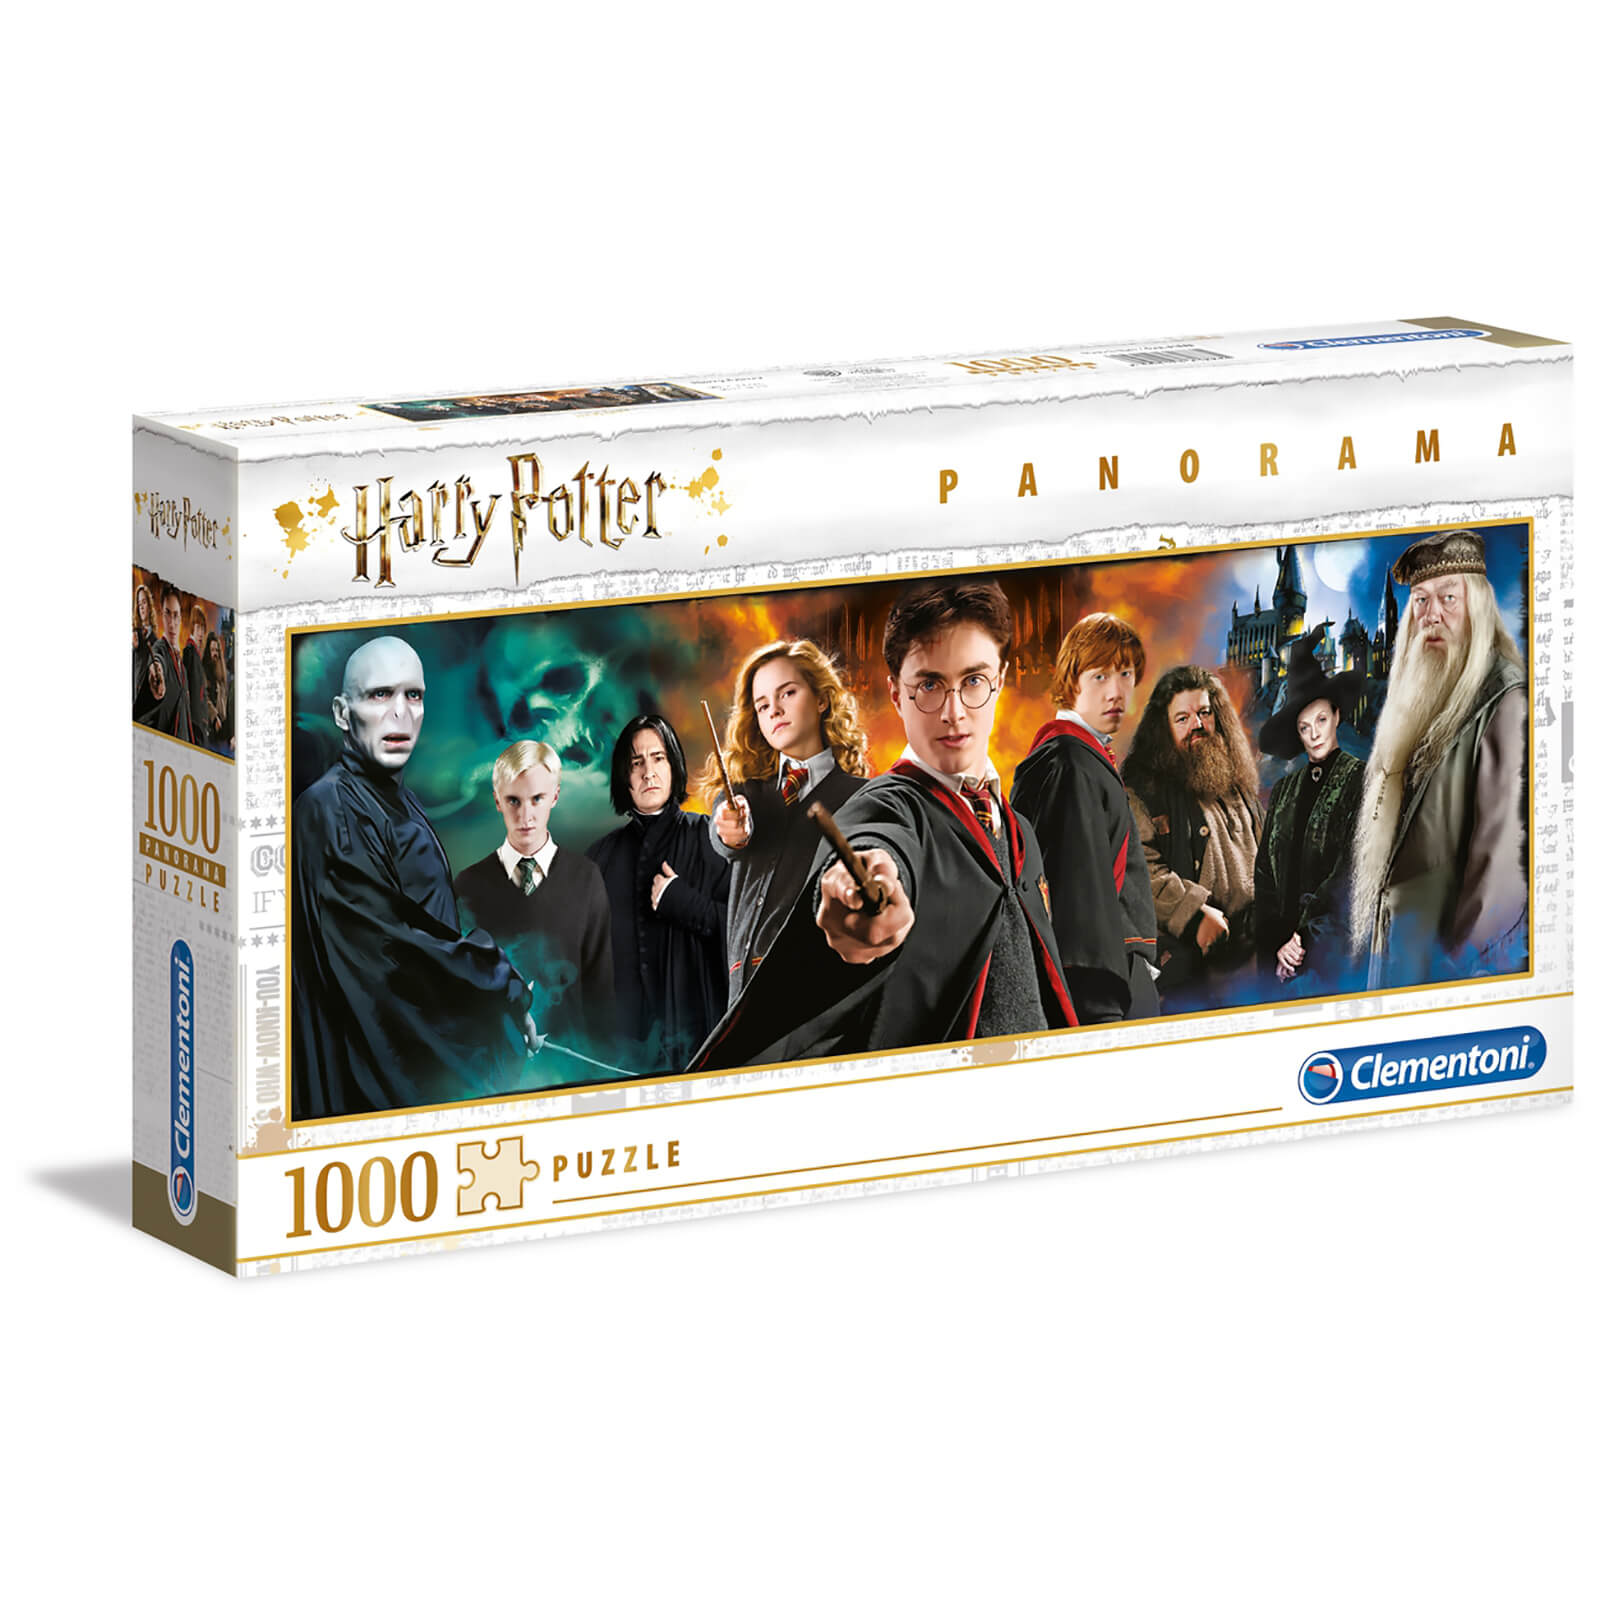 Clementoni 1000pcs Panorama Jigsaw Puzzle - Harry Potter